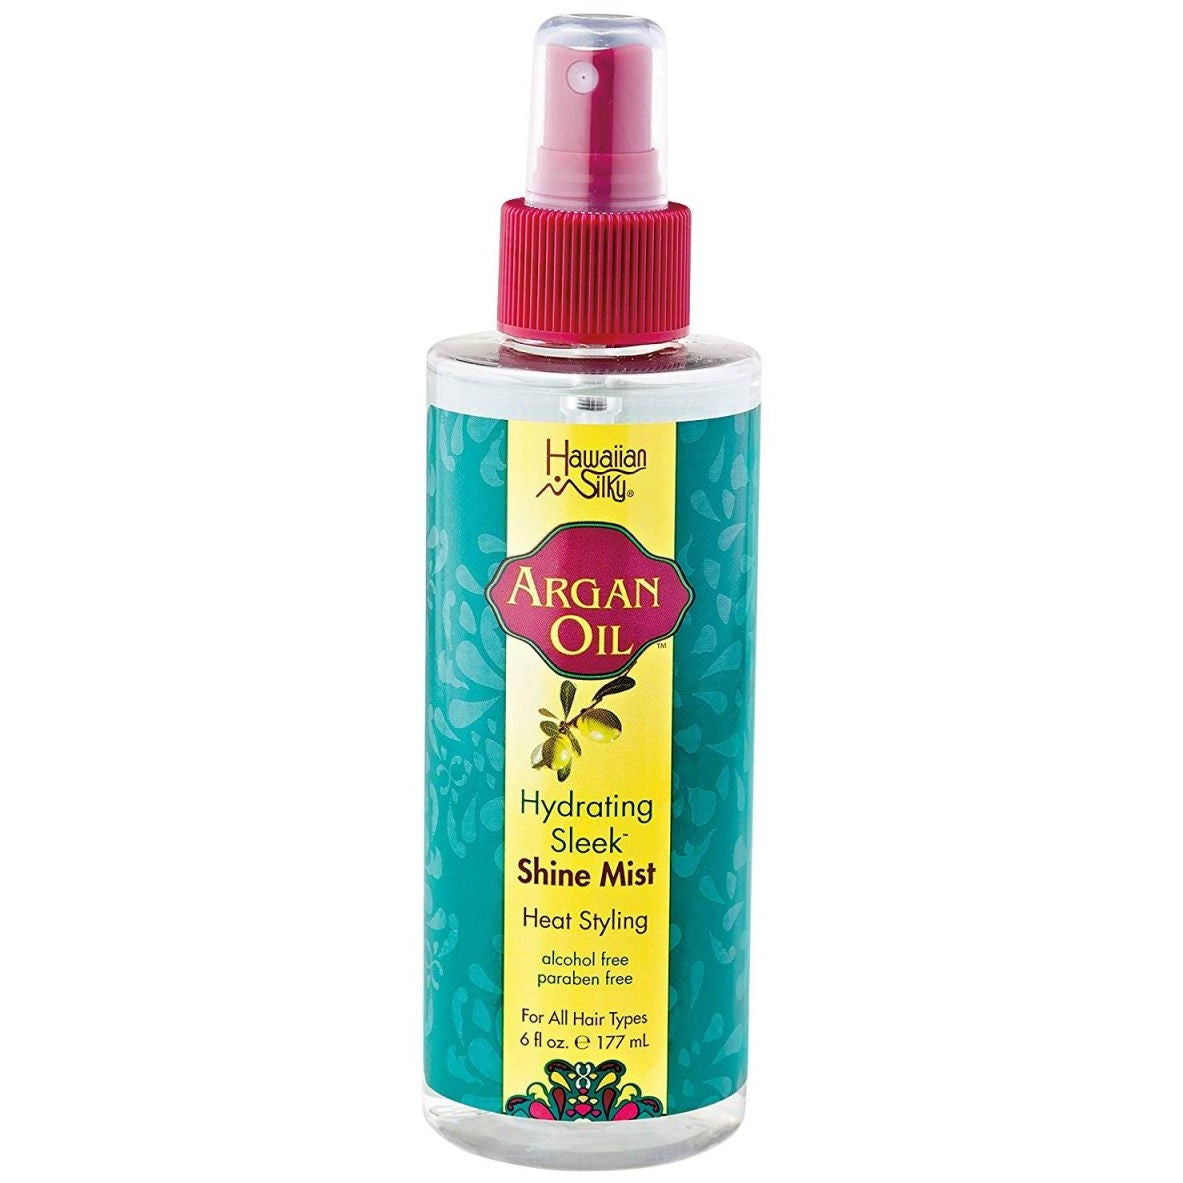 Hawaiian Silky Argan Oil Hydrating Sleek & Shine Mist 177 ml